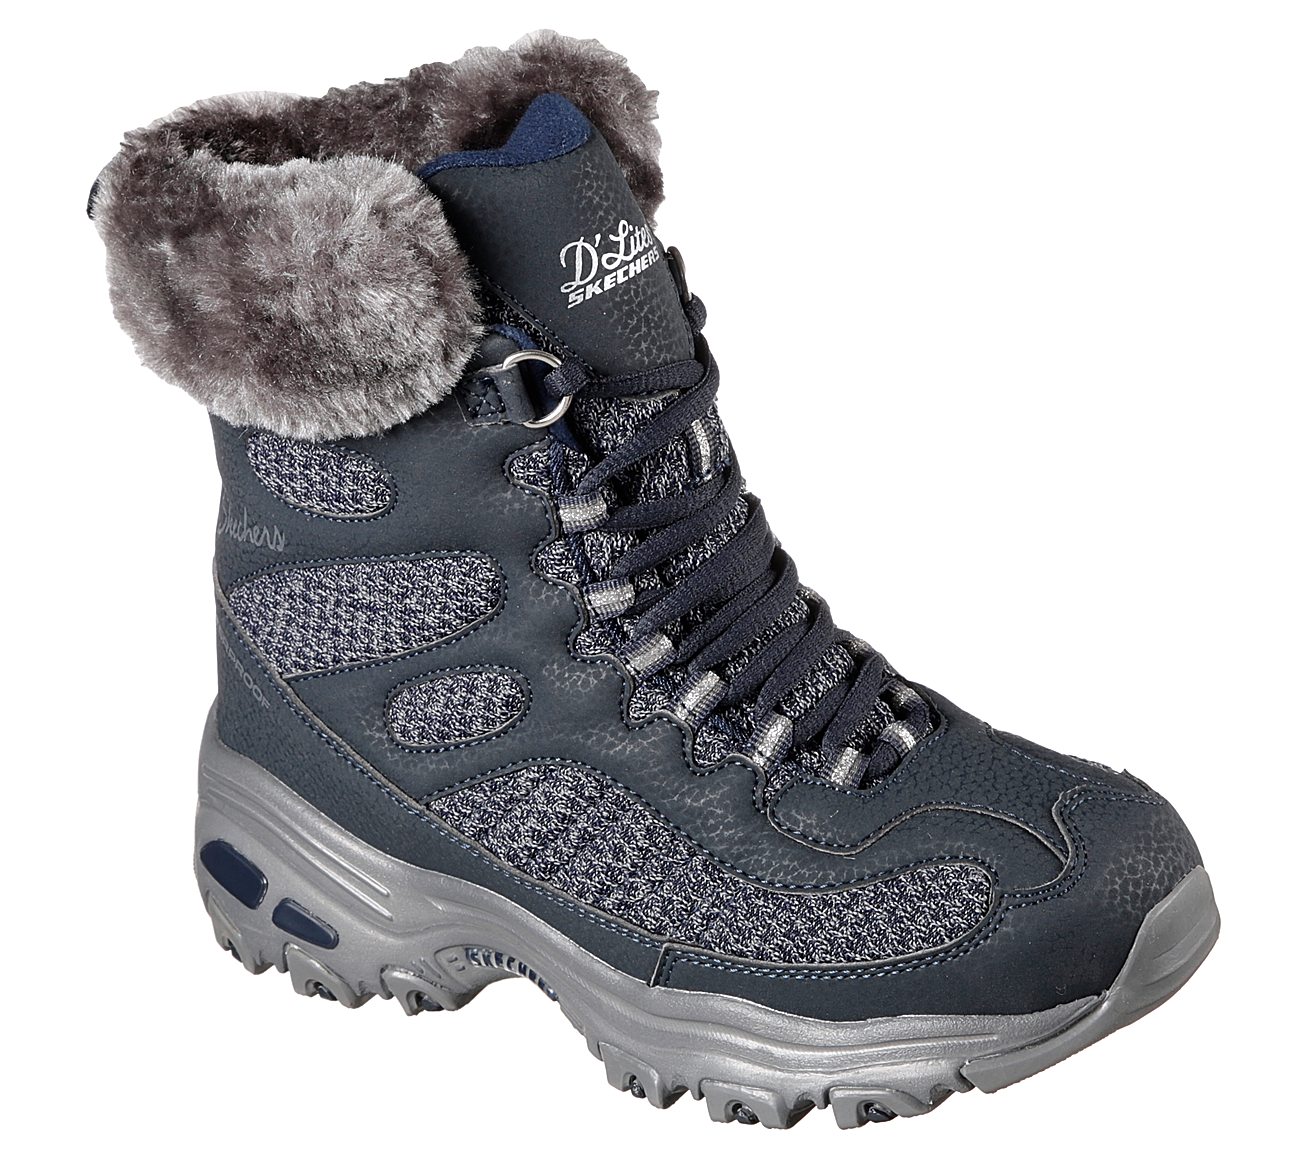 skechers snow boots